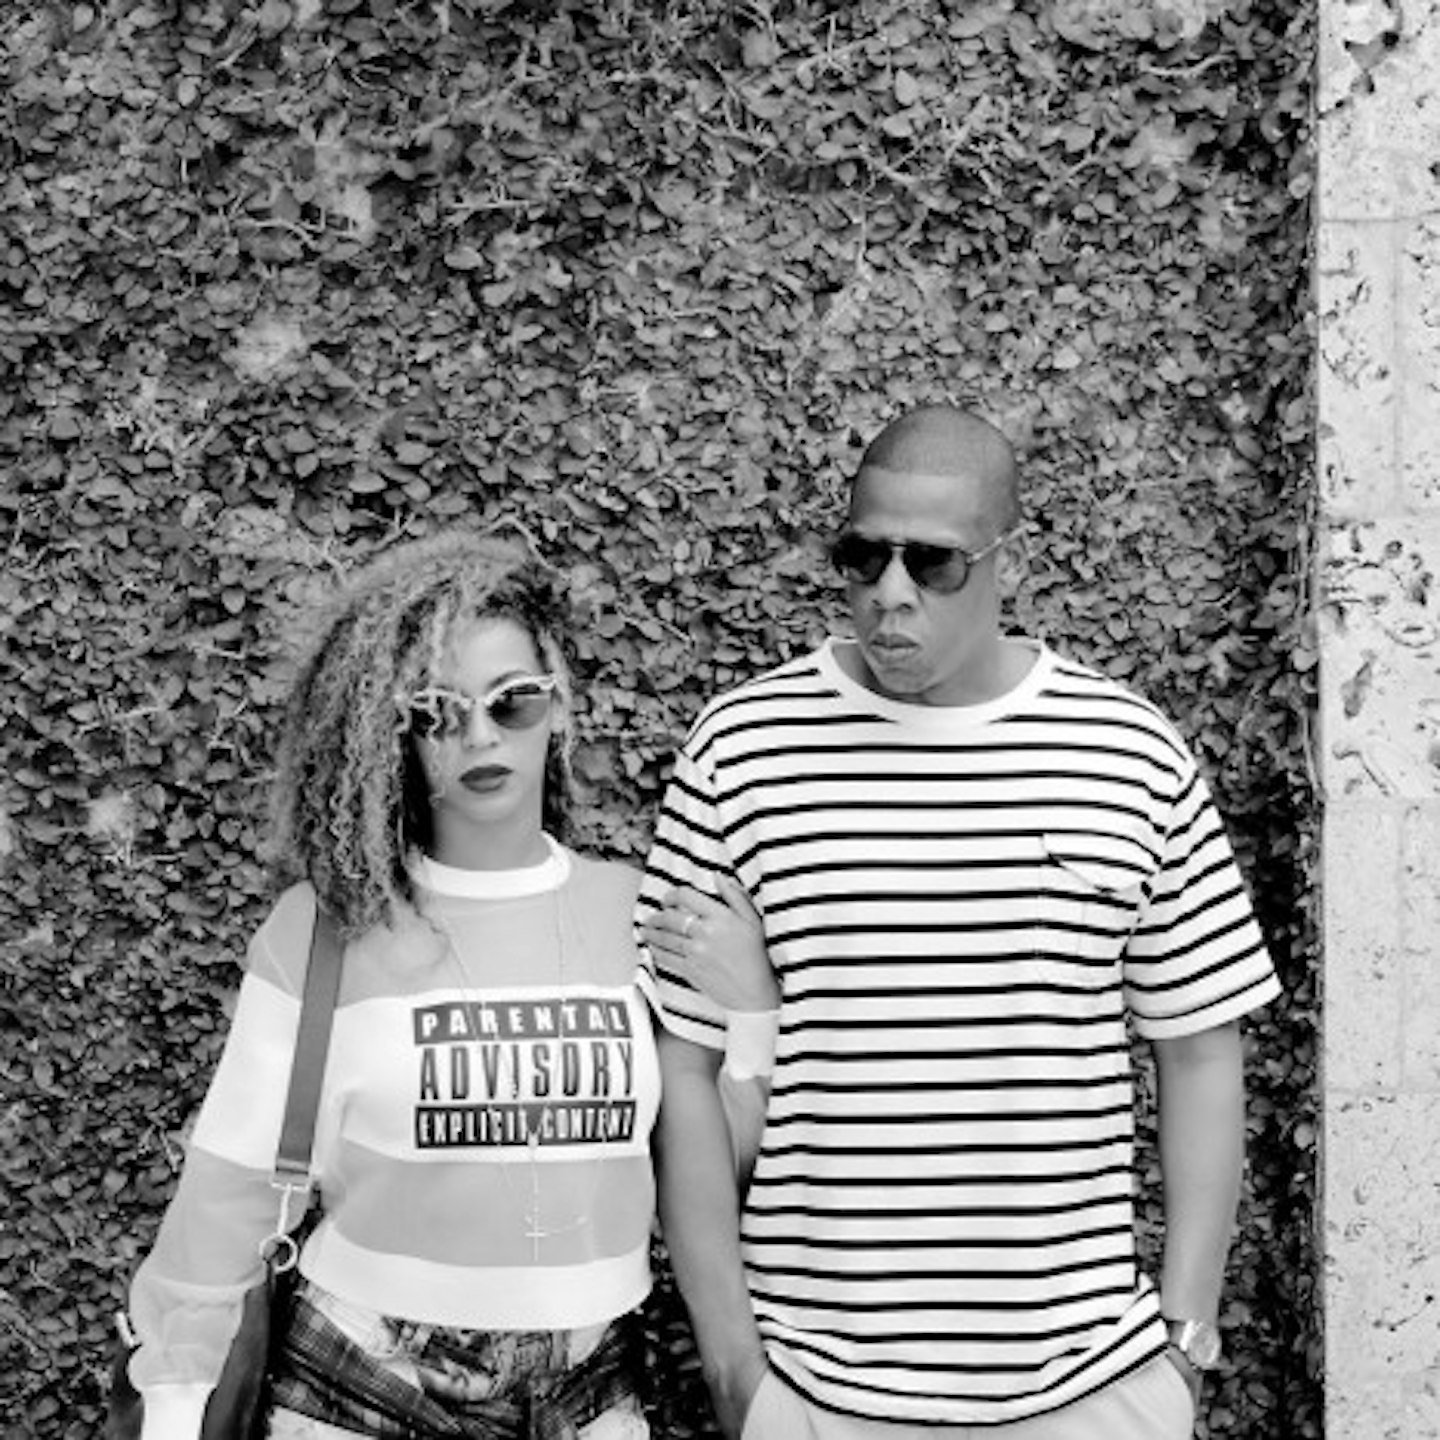 Jay Z is married to pop powerhouse Beyonce